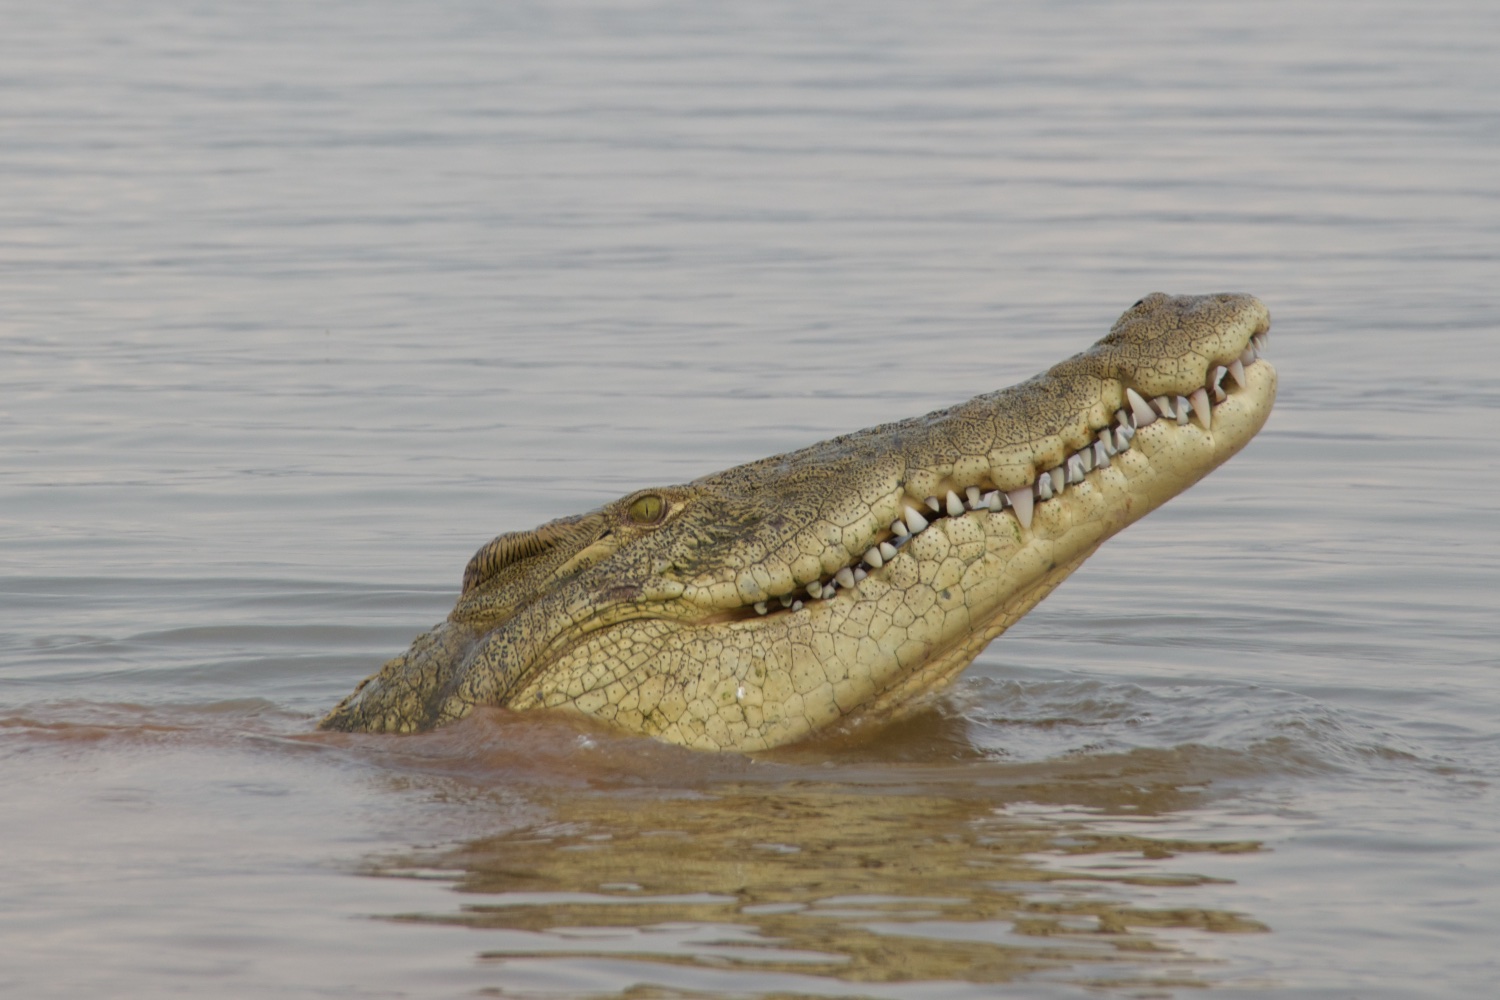  Crocodile after eating fish, Lake Chomo 